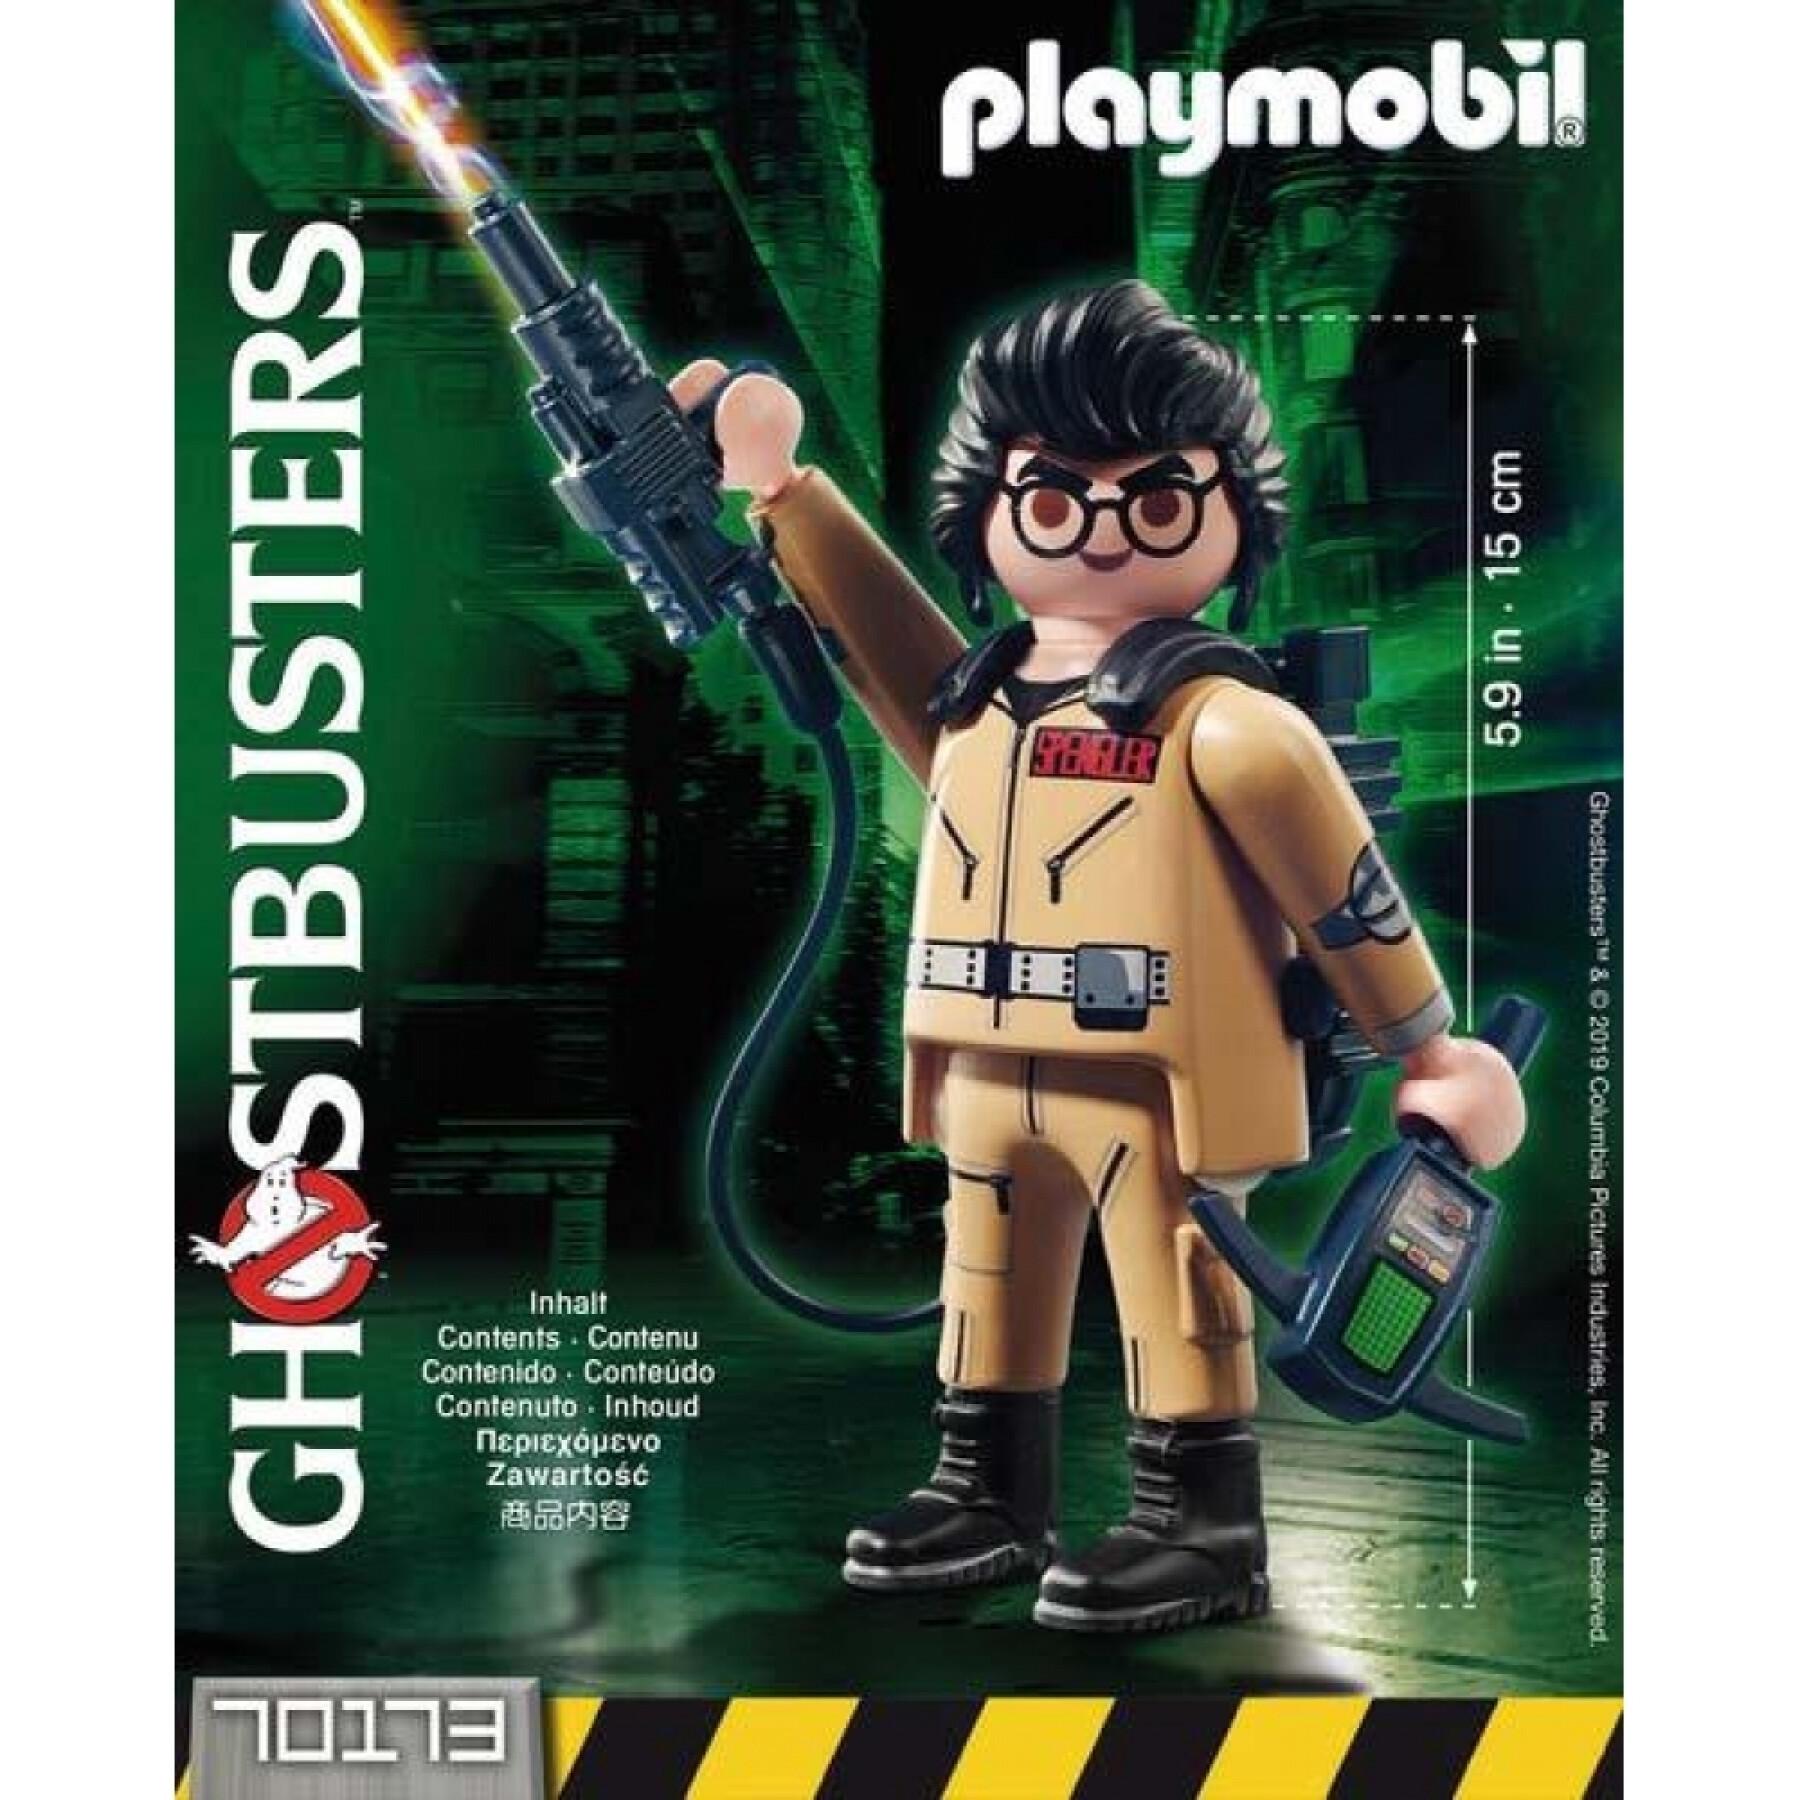 Figurina ghostbusters es Playmobil